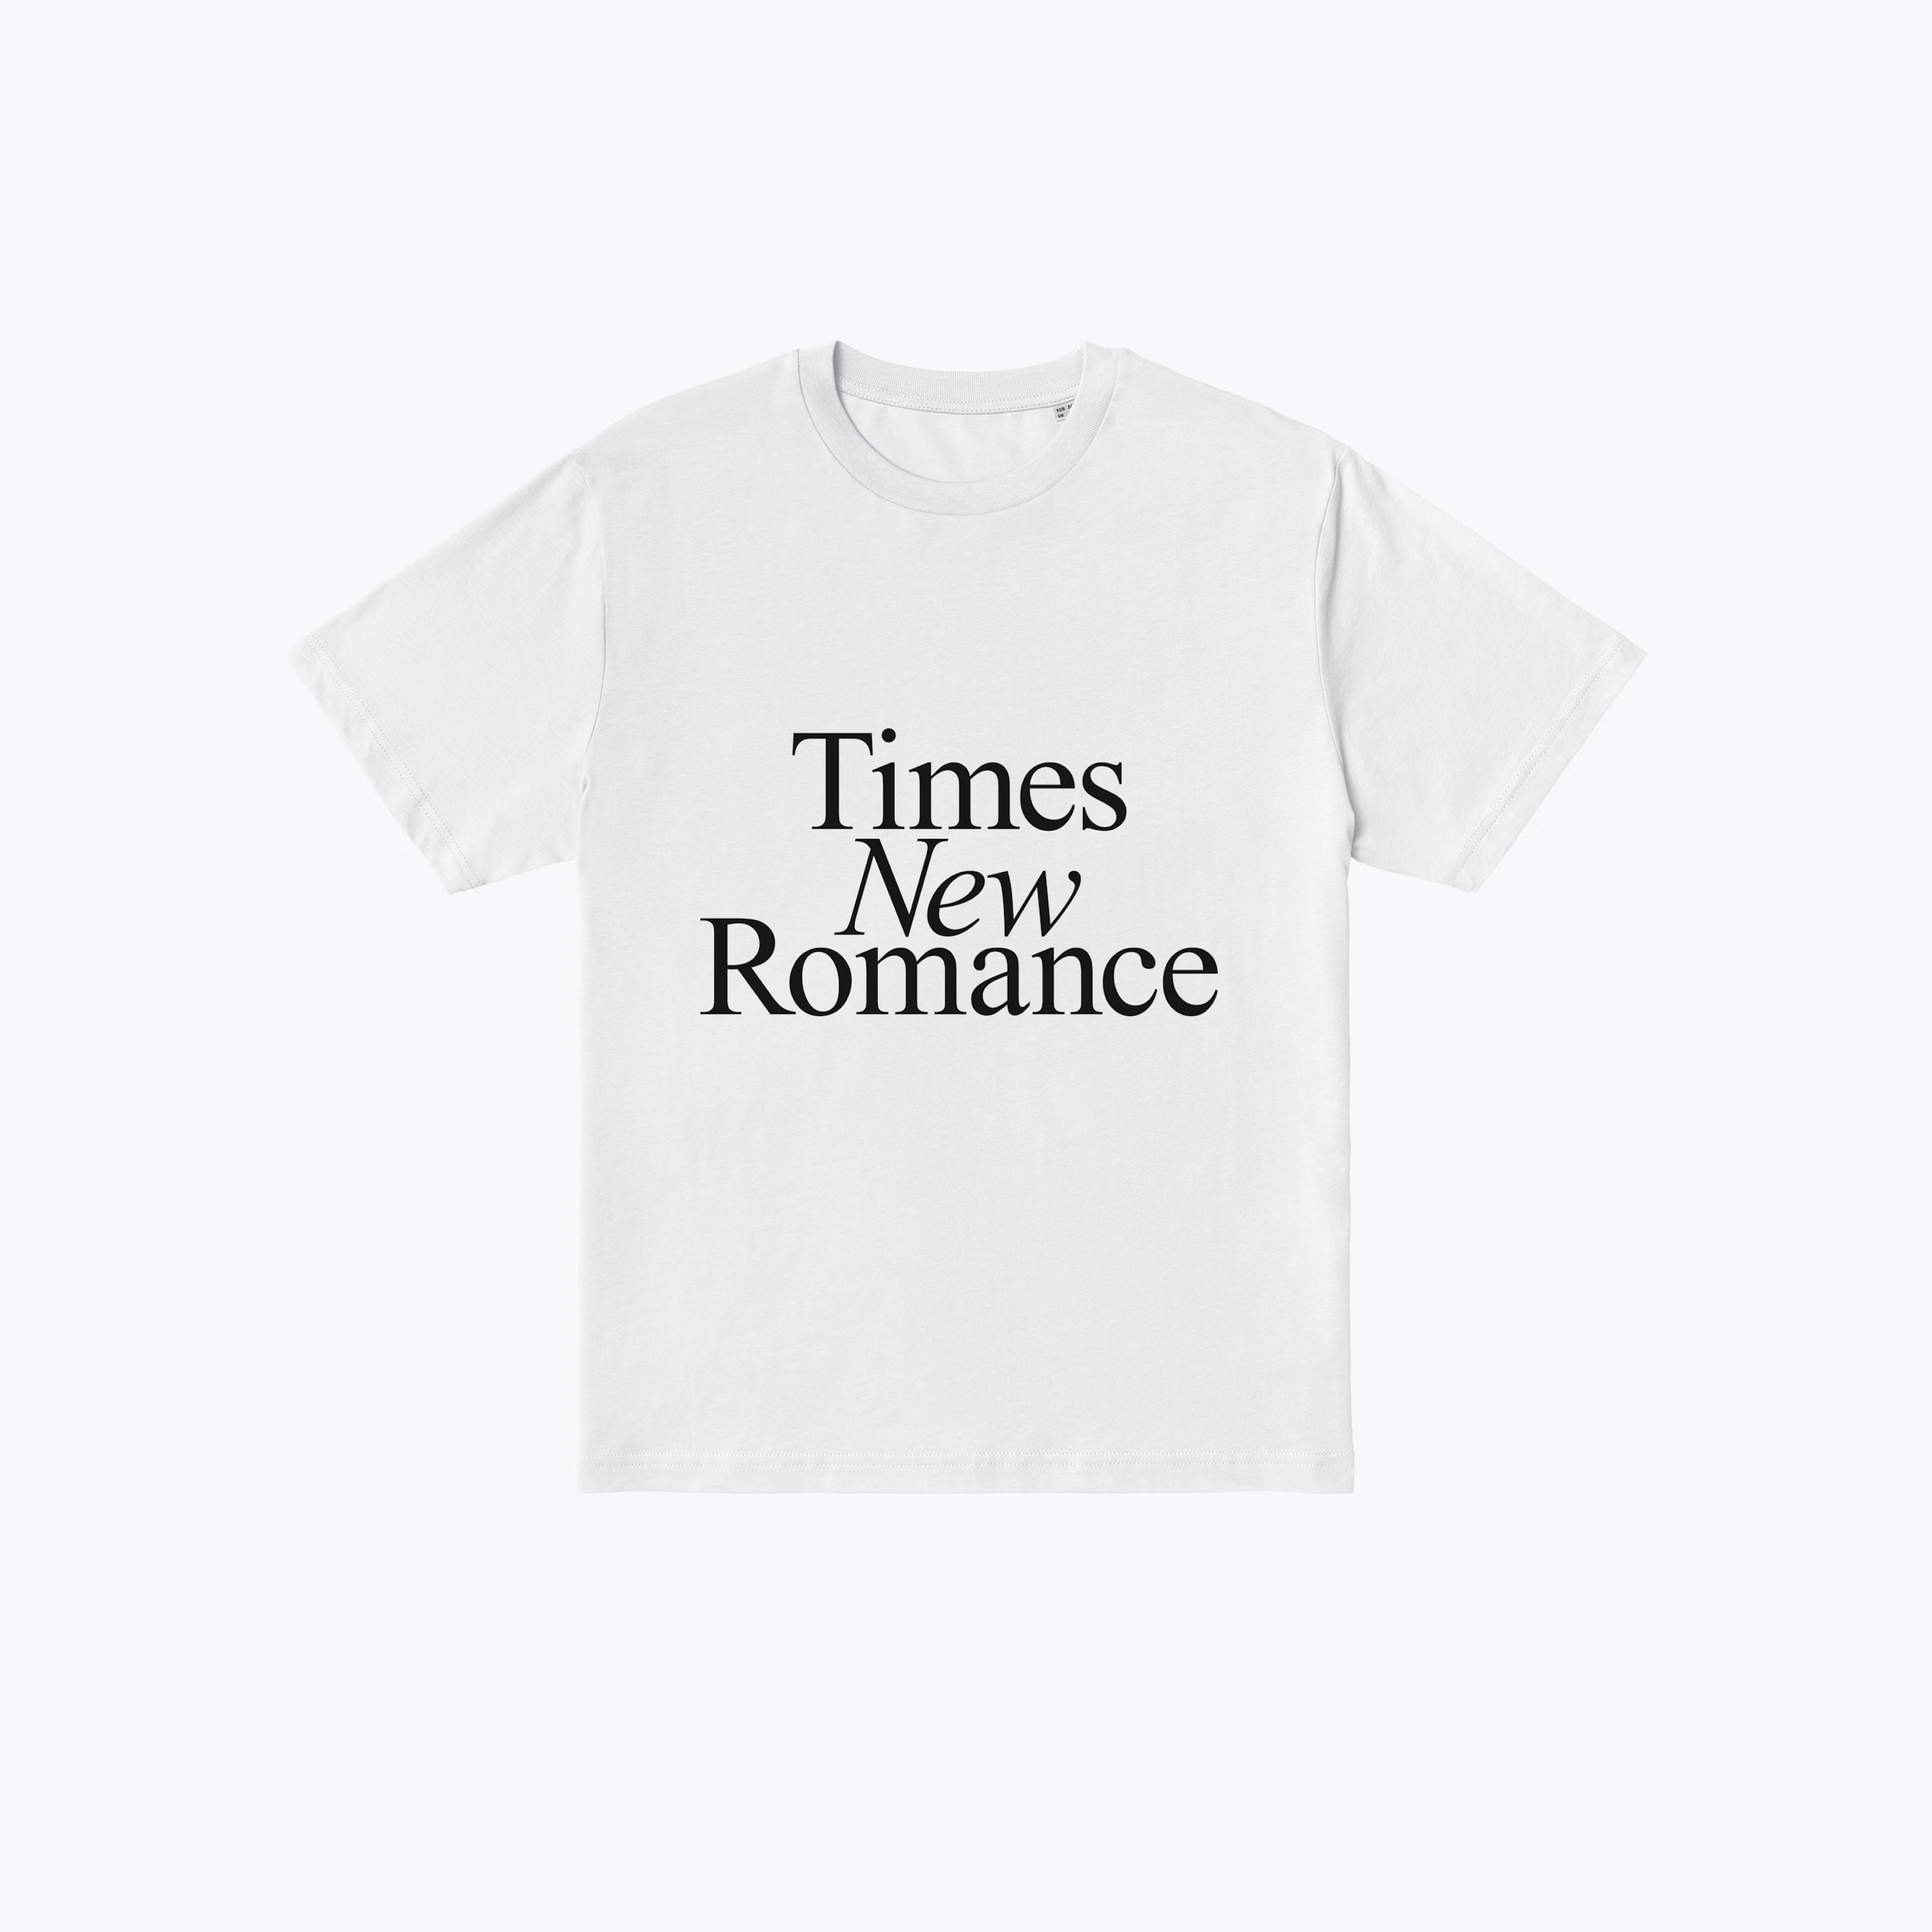 The Times New Romance Shirt designed by Hendrik Schwab